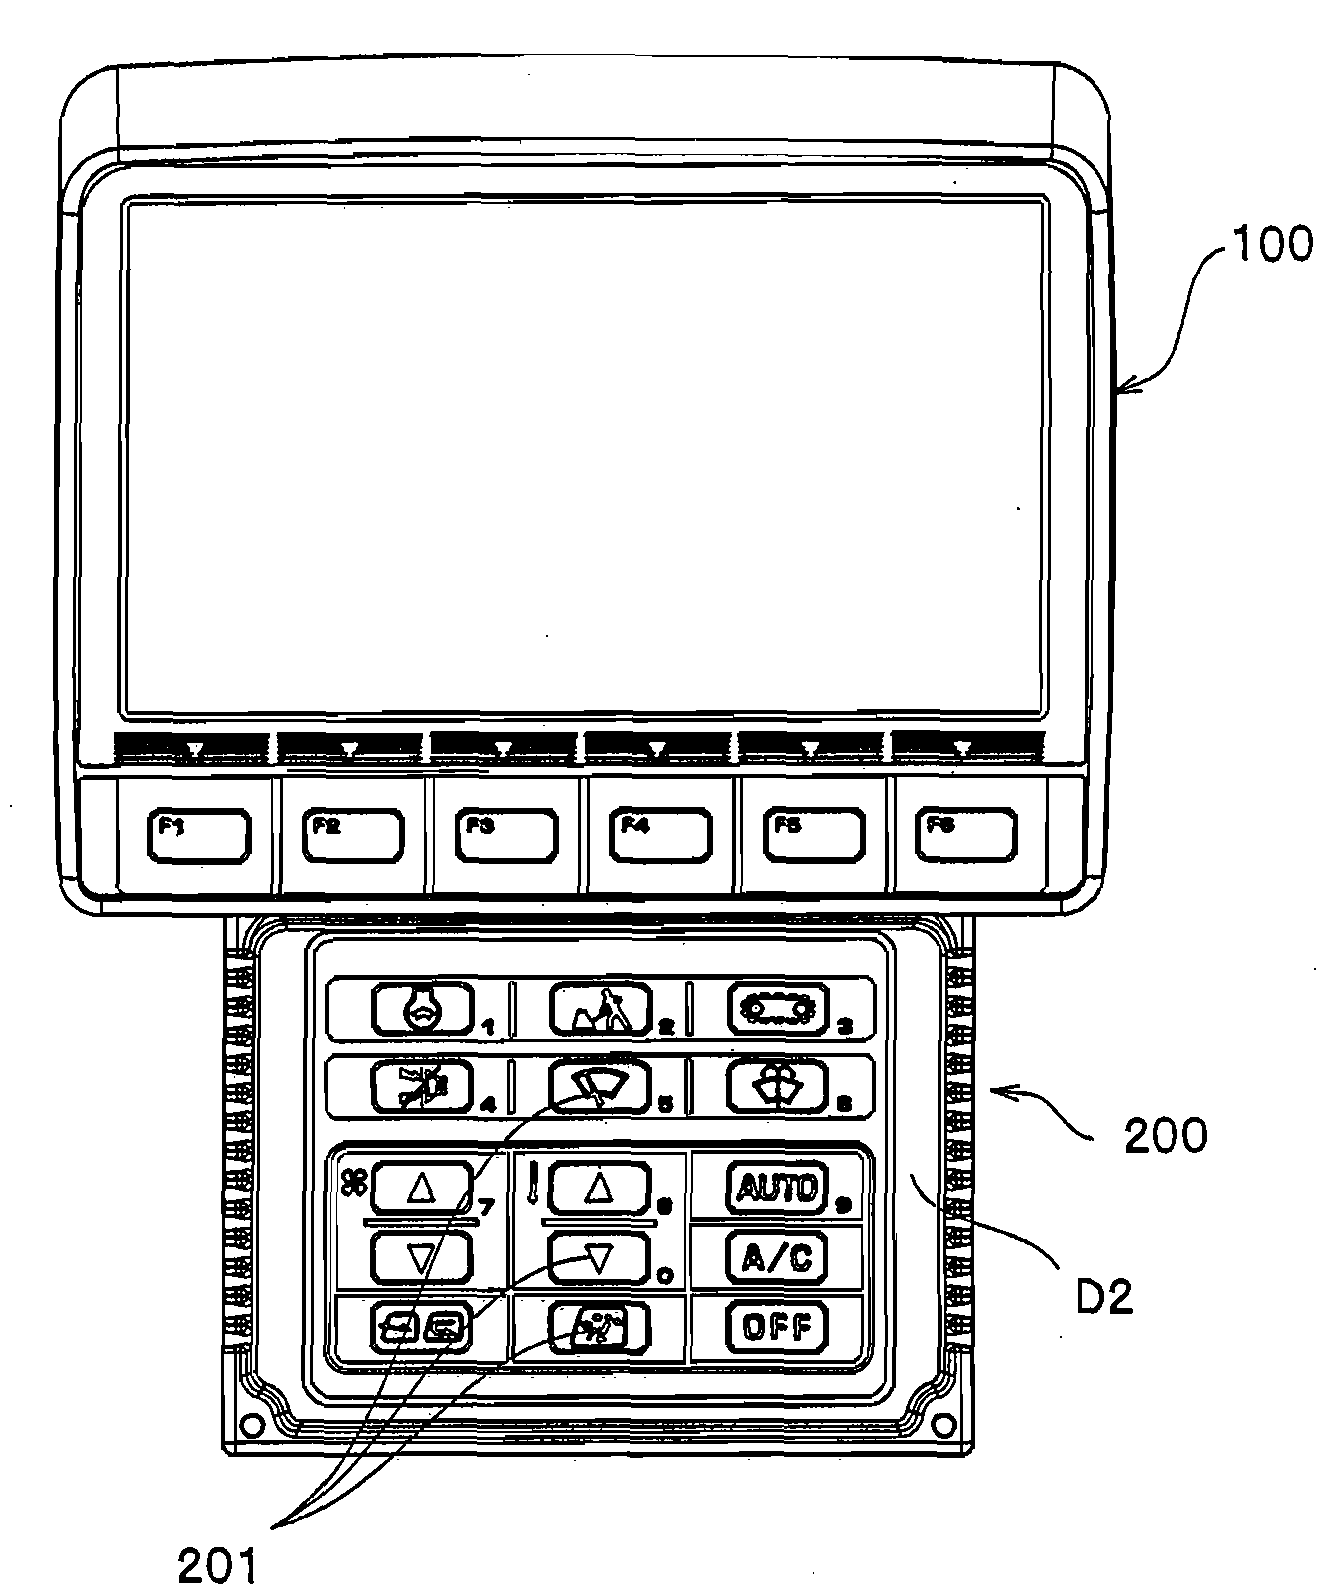 Monitor Device